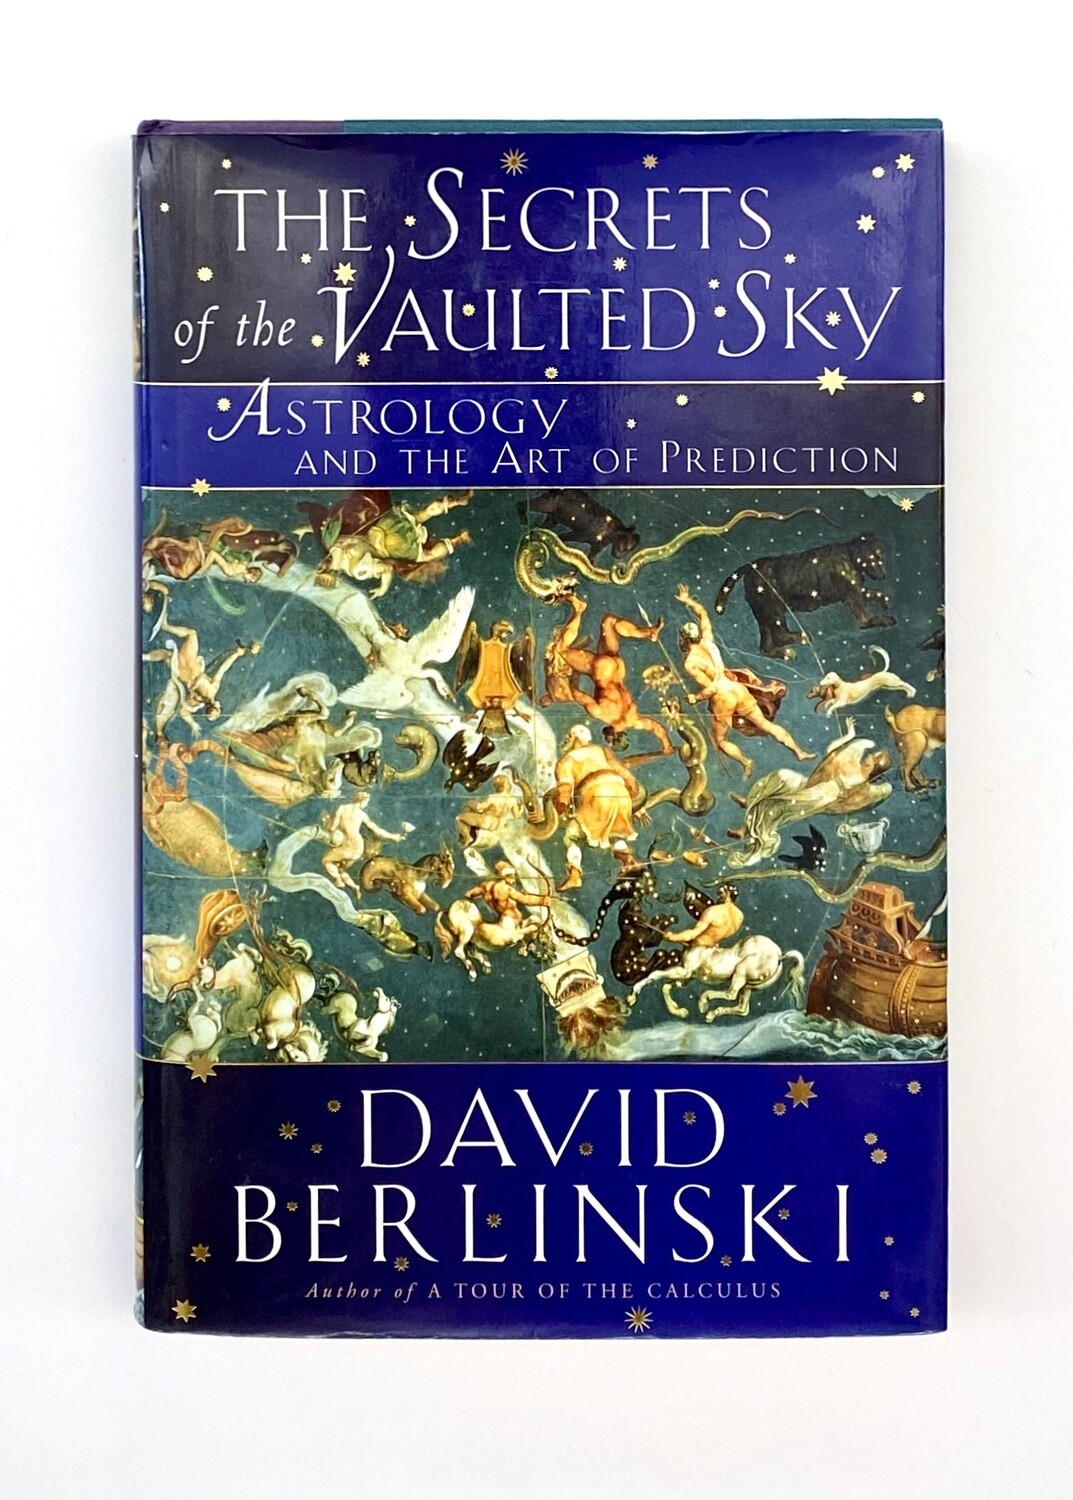 USED - Secrets of the Vaulted Sky, David Berlinsky